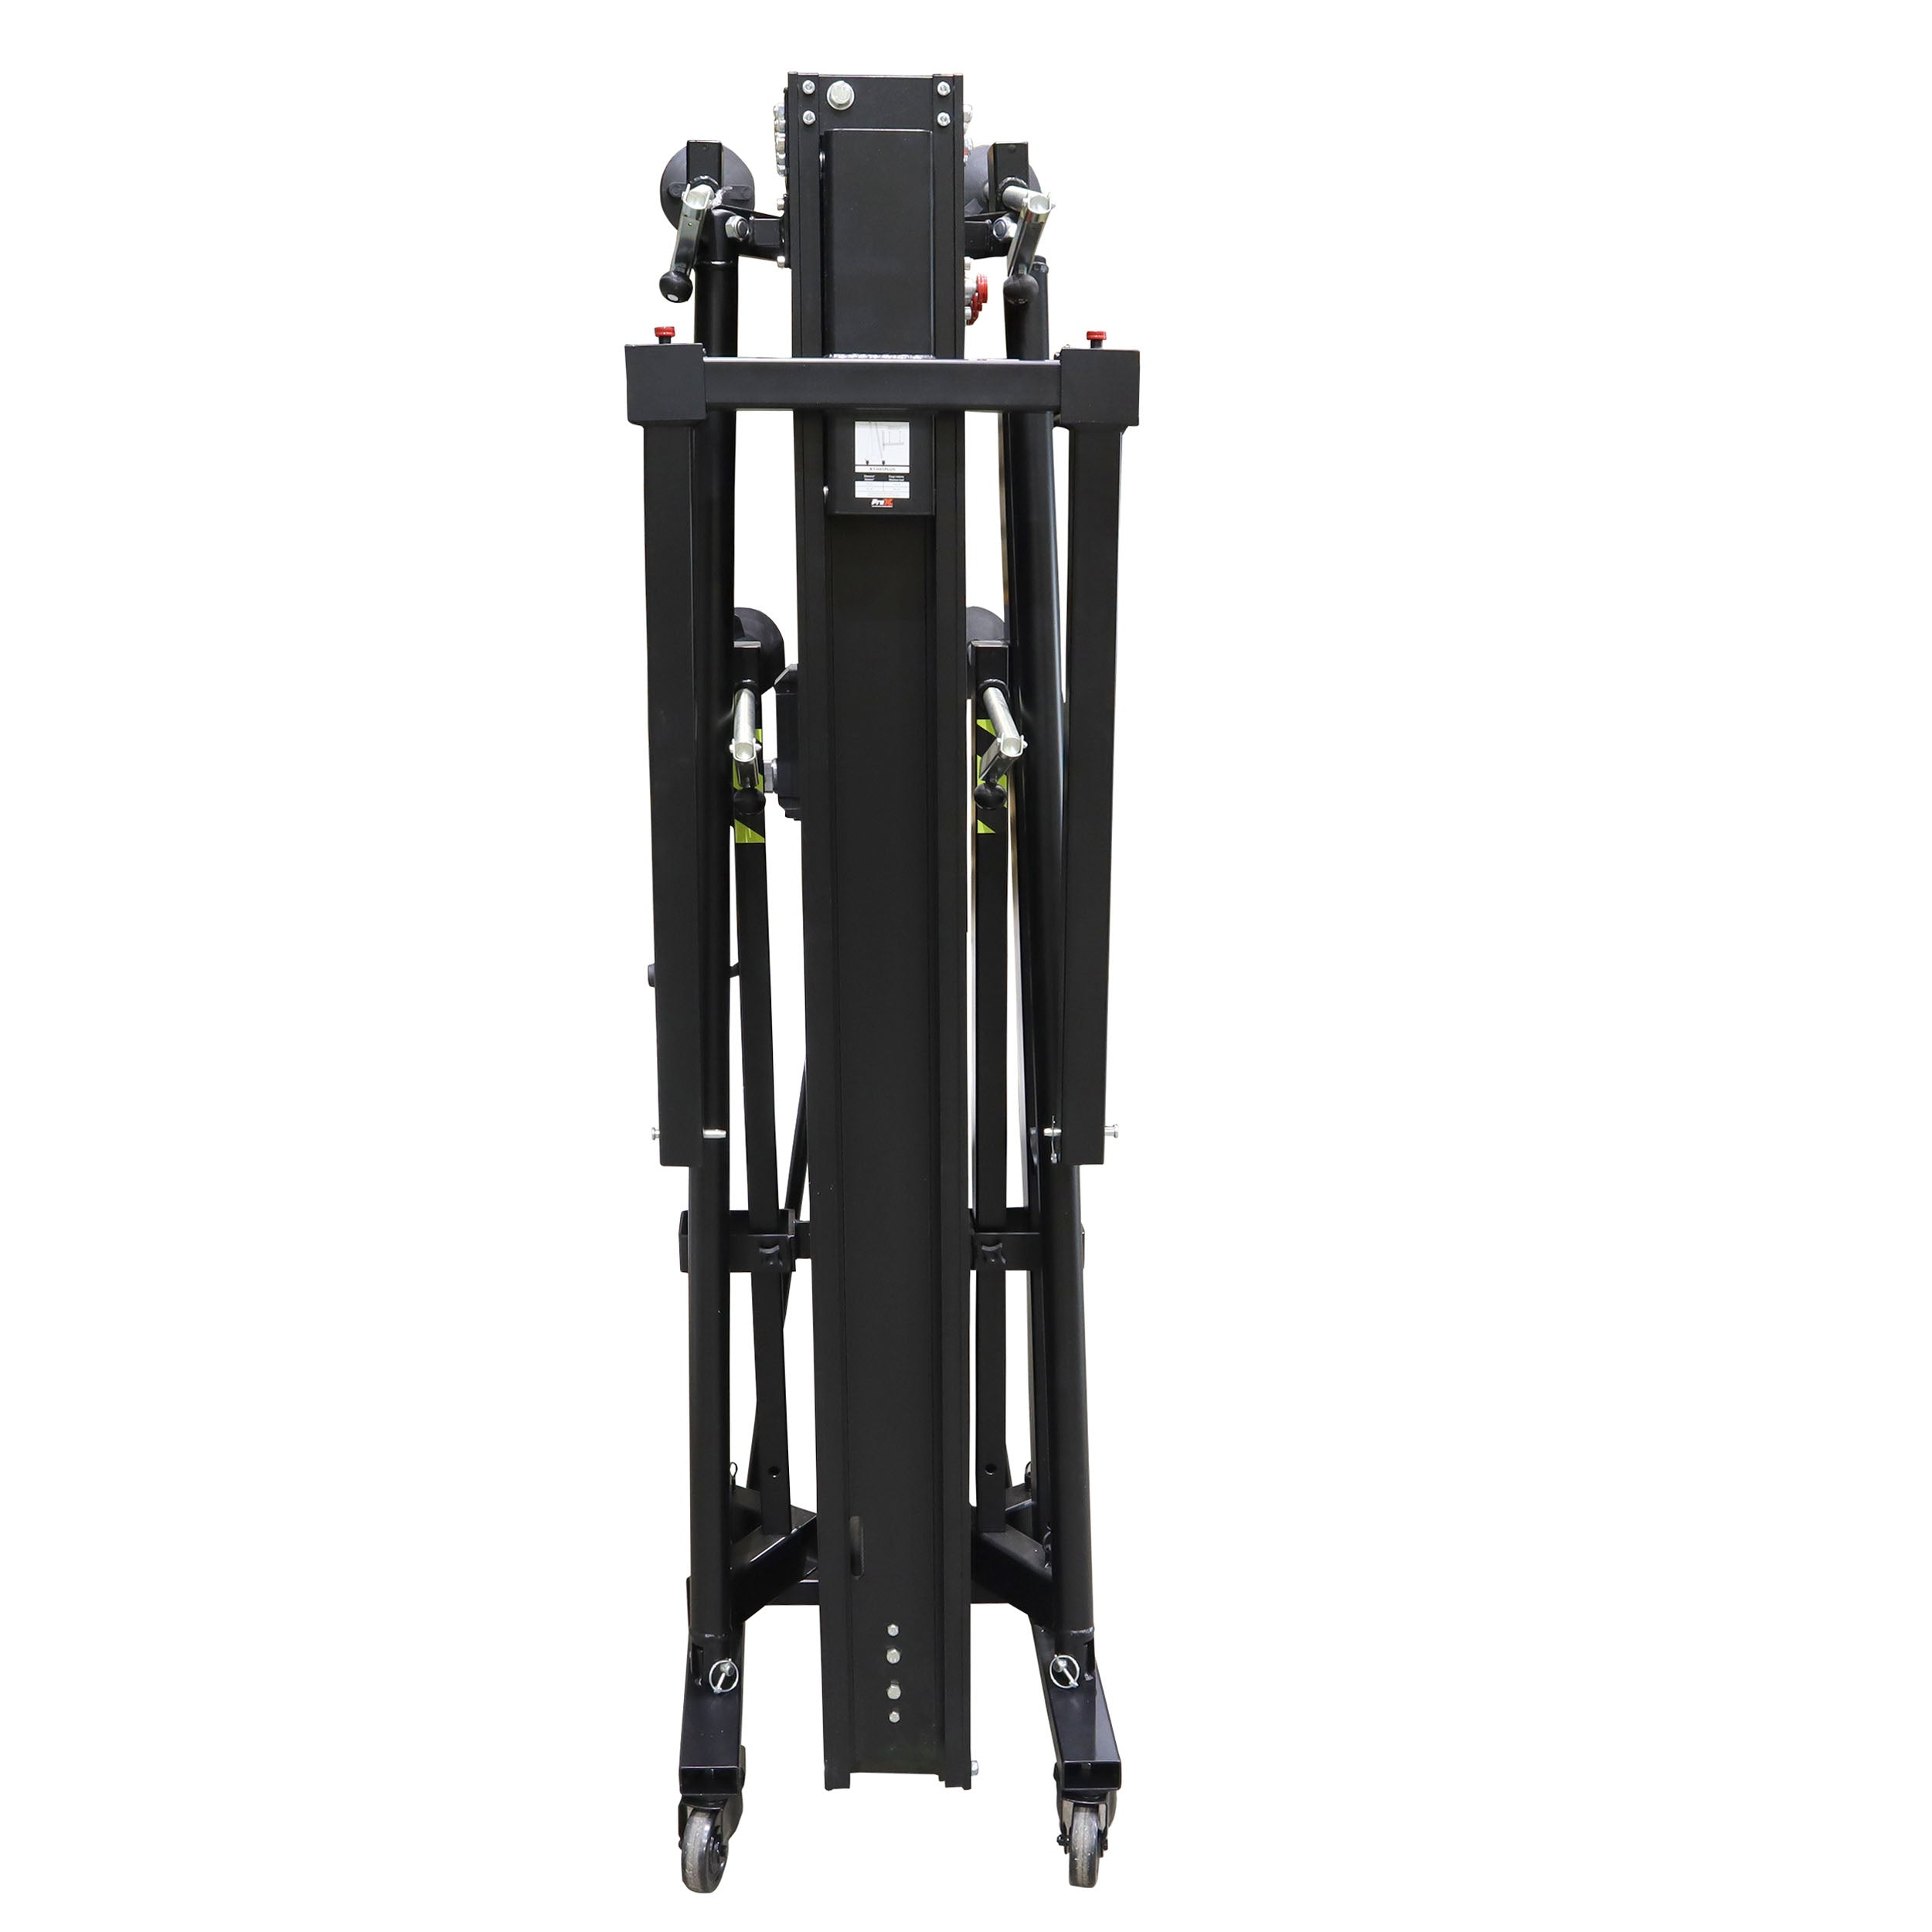 Pro X 21 Ft. Lift Frontal Loading Lifting Tower for Line Array - Max Load 500kg-1102 lbs | Black Aluminum XT-HERCULES 6.5 PLUS